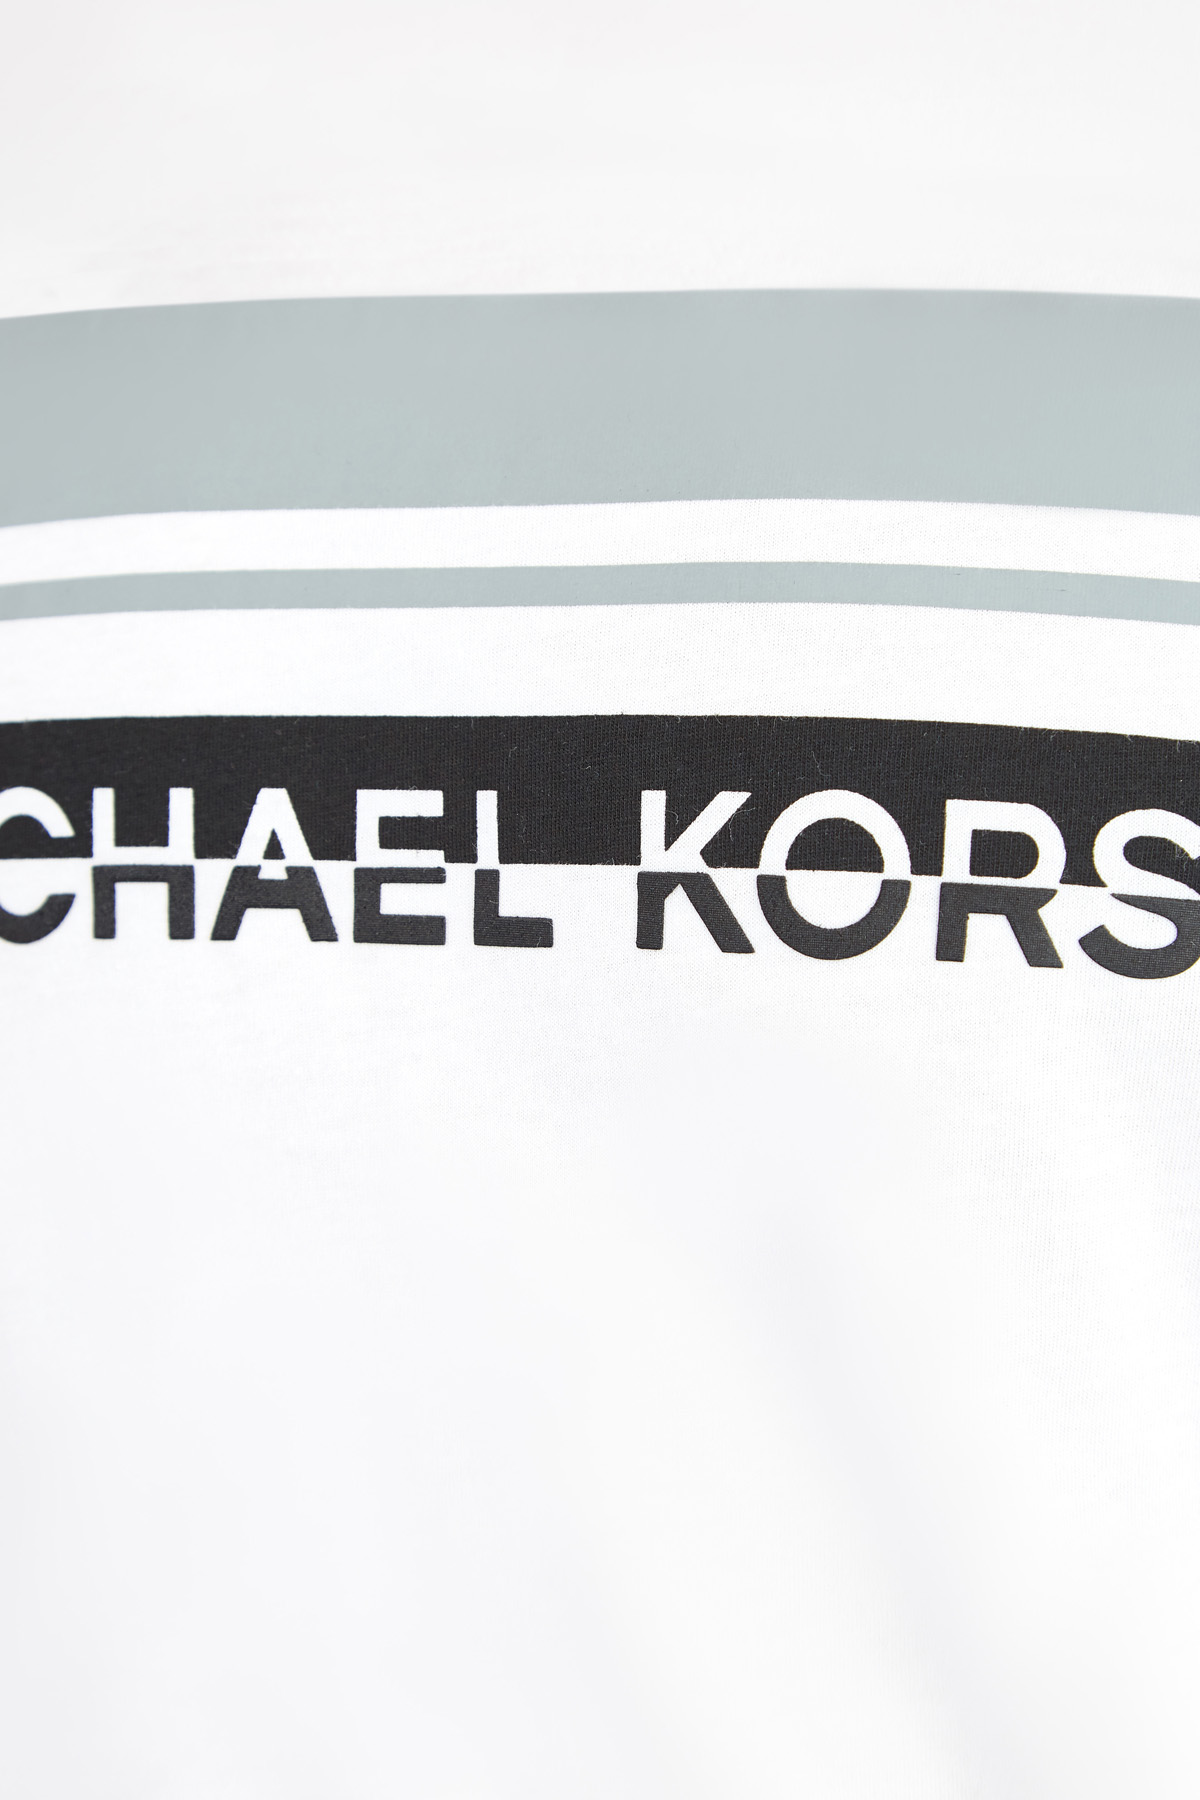 Футболка-colorblock из хлопка с логотипом в технике аппликации MICHAEL KORS, размер XL - фото 5